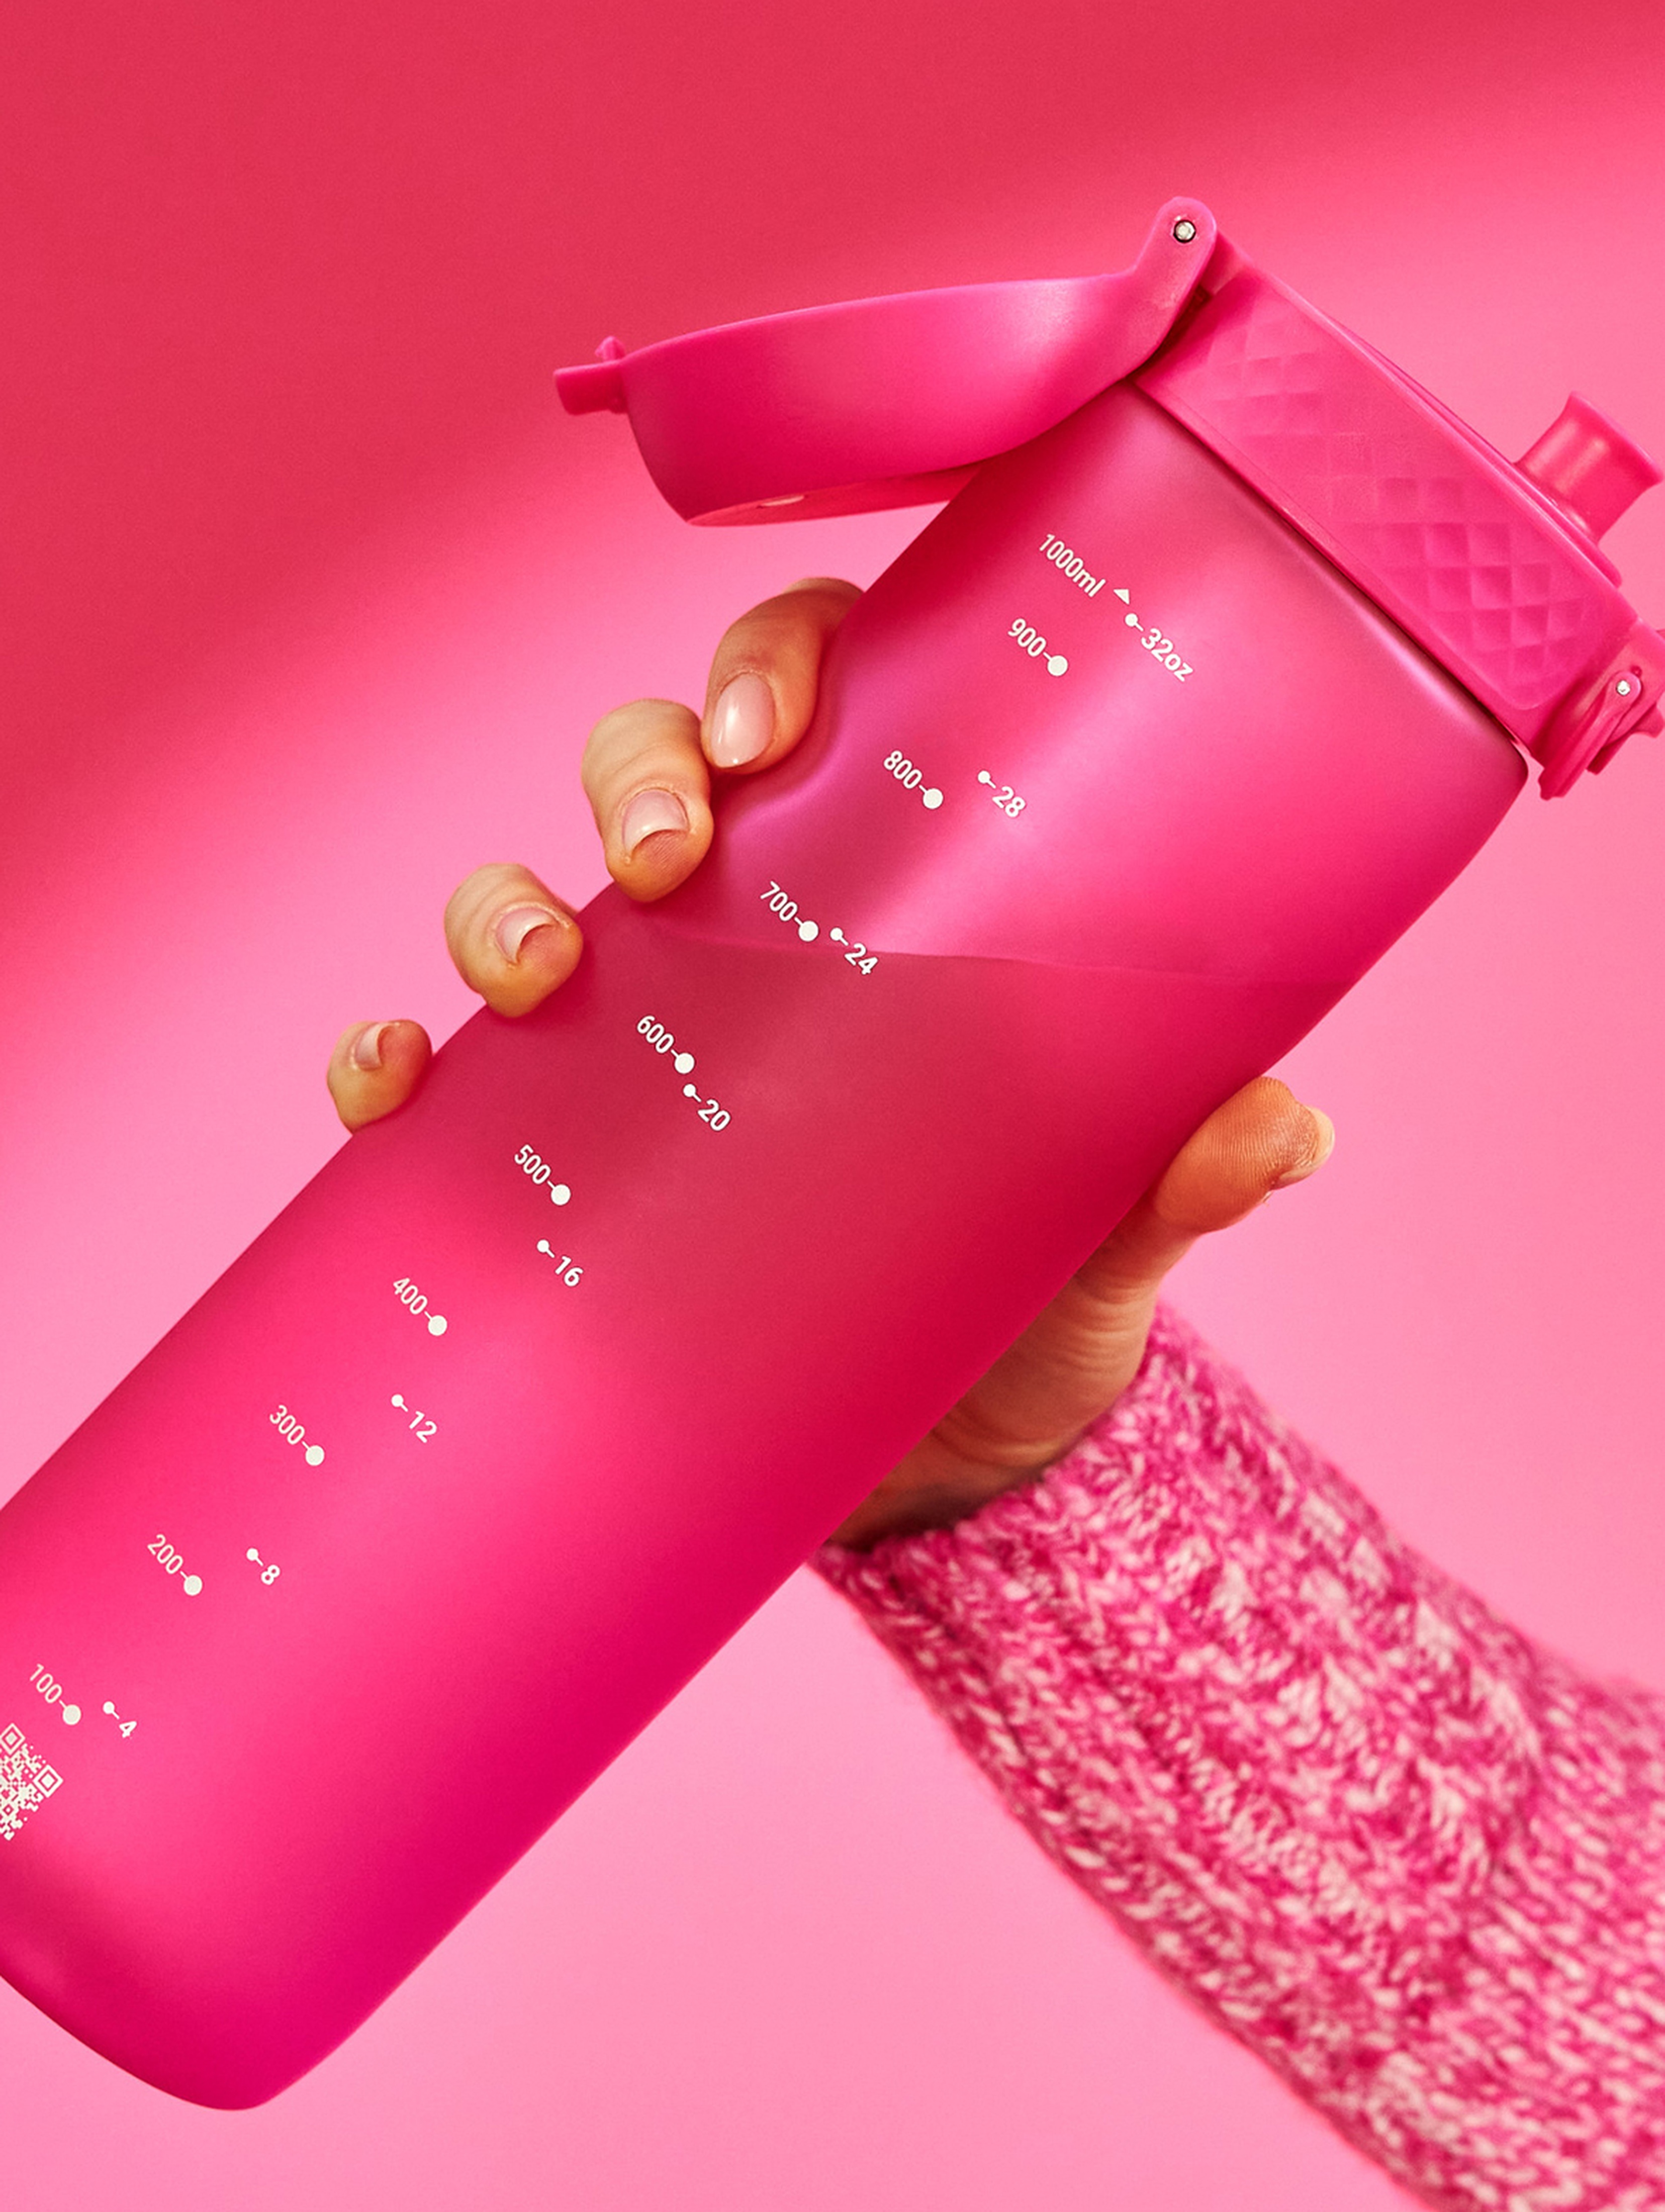 Butelka na wodę ION8 BPA Free Pink 1200ml - różowa